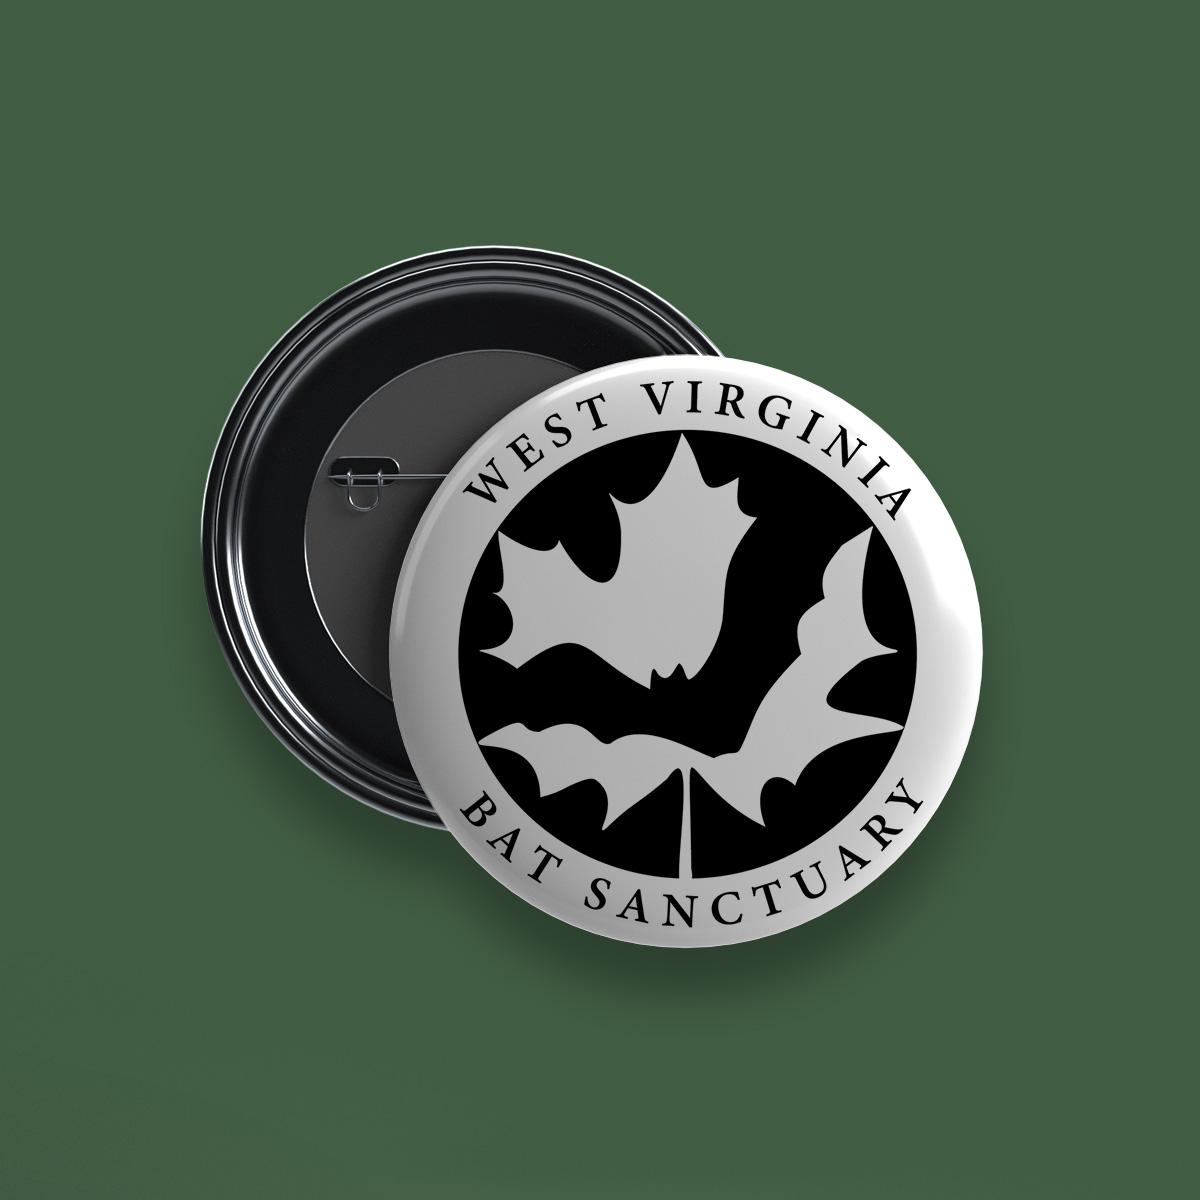 WV Bat Sanctuary logo on a pin